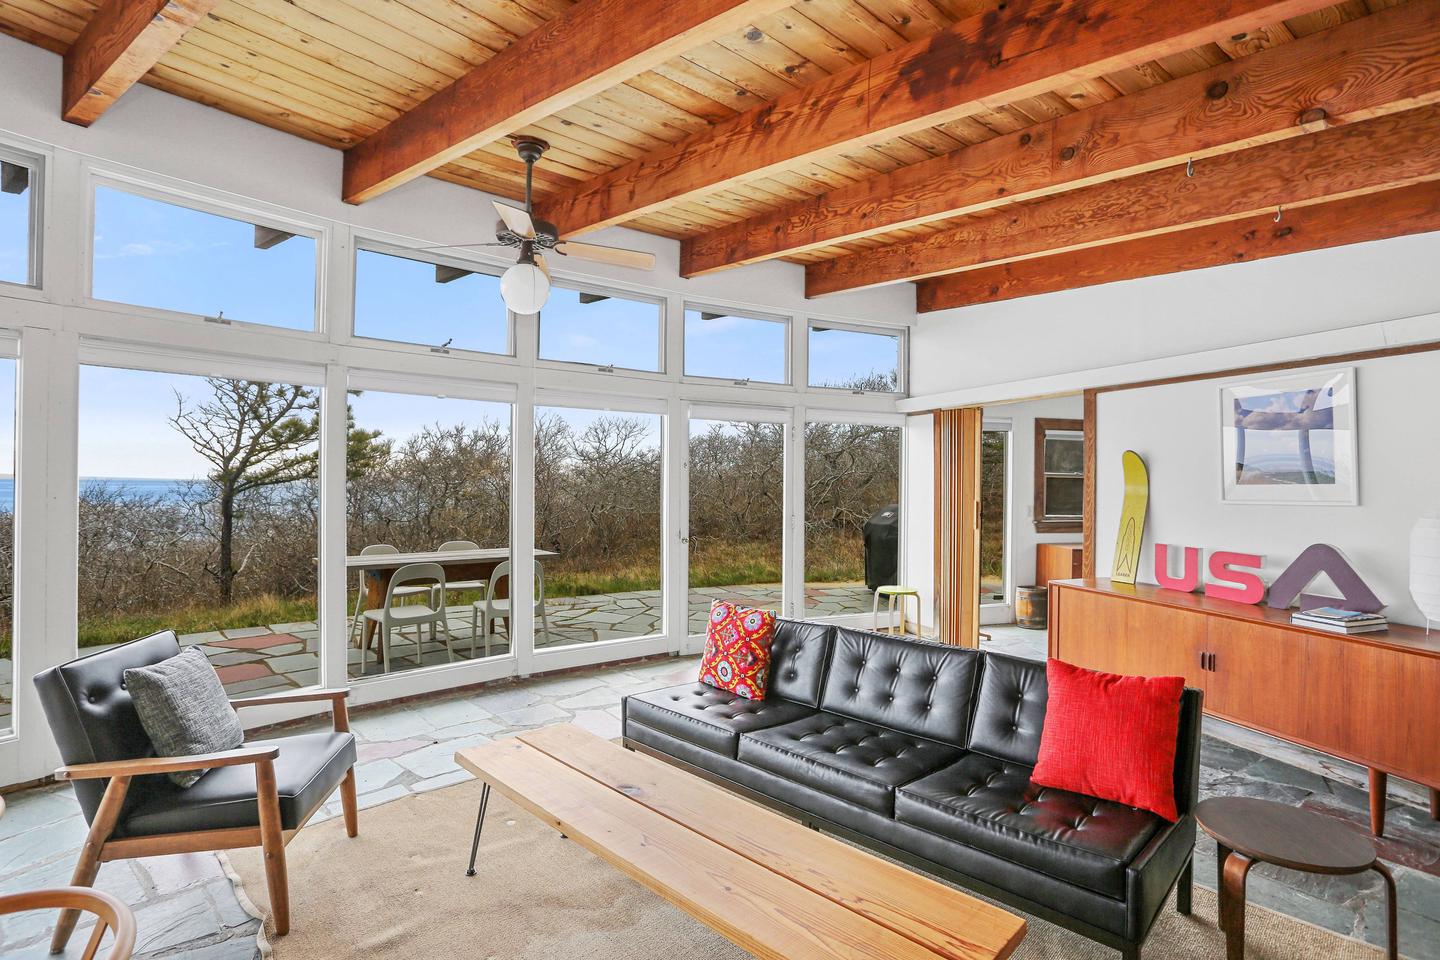 The Seashore Modern House enjoys plenty of natural light in its spacious living room